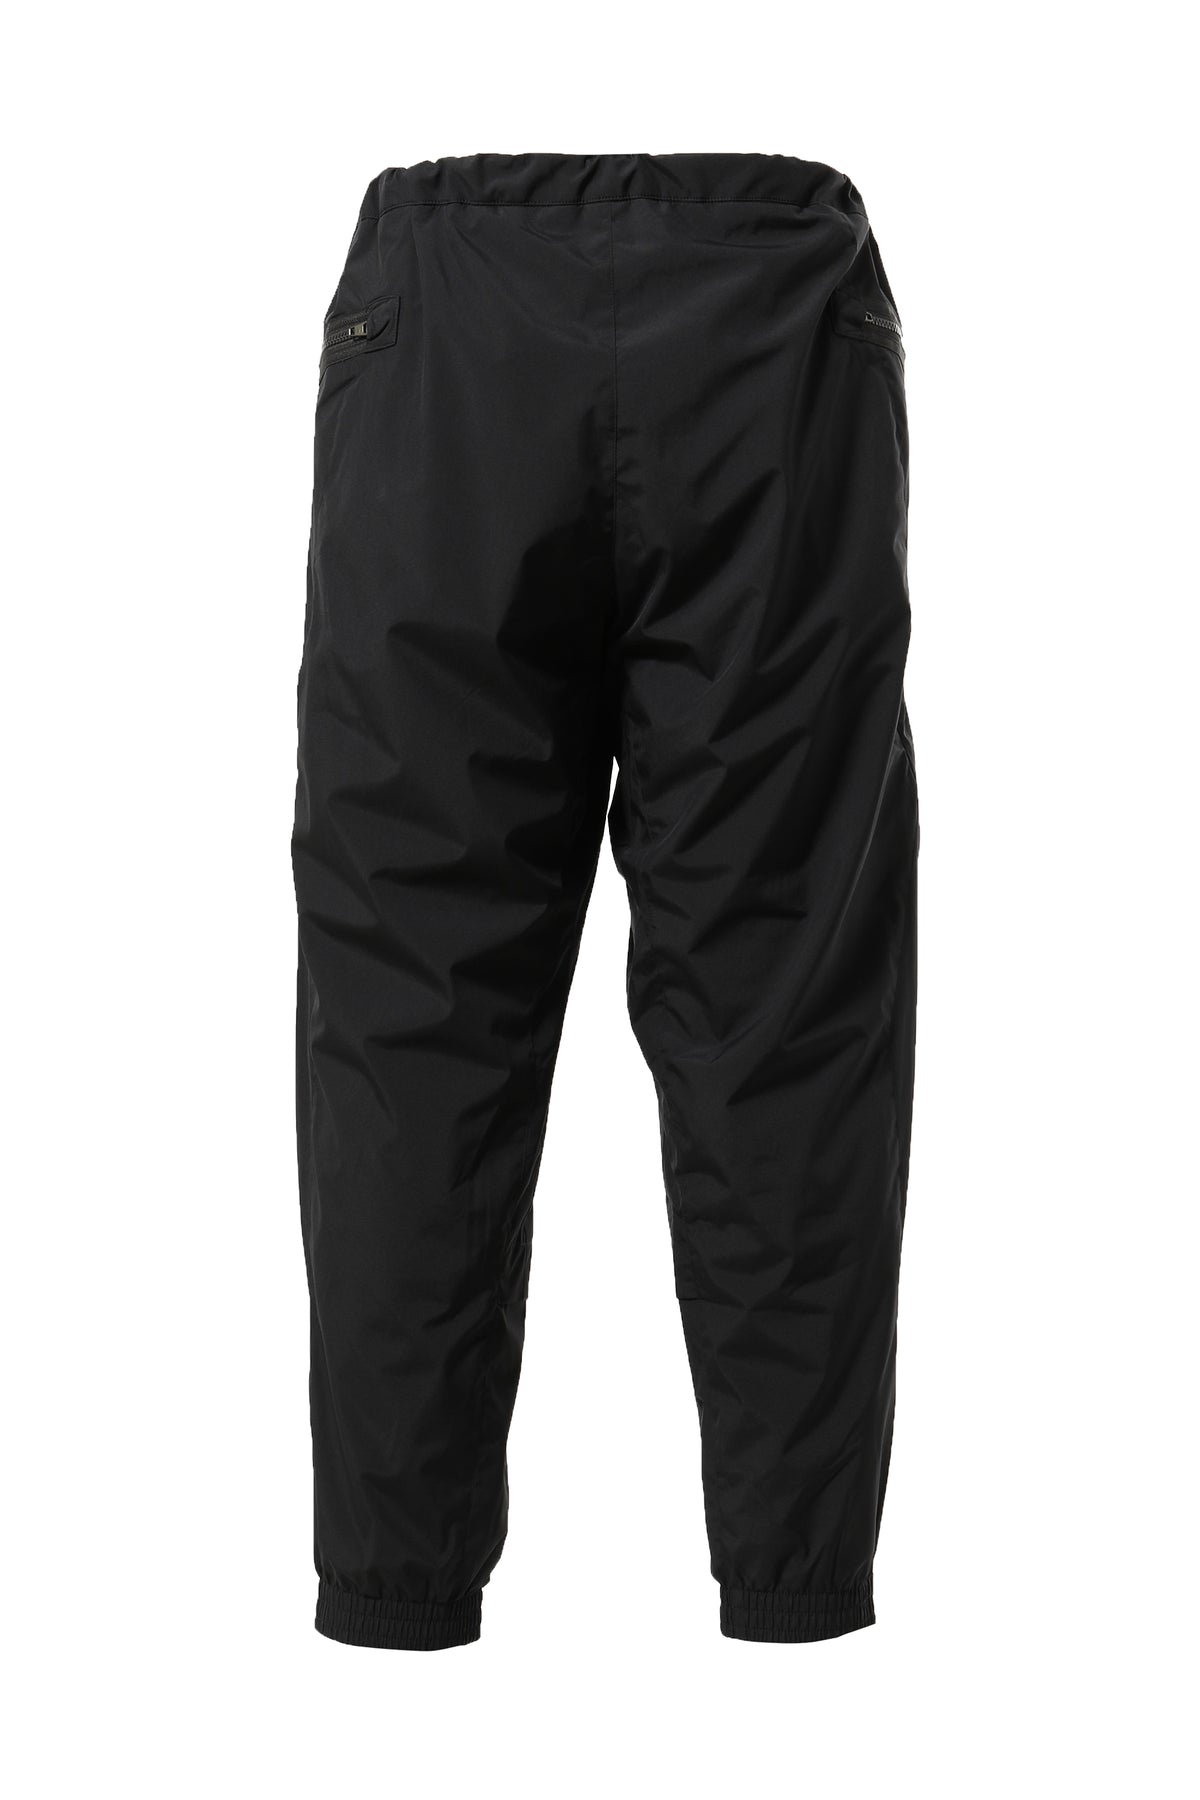 Buy Black Track Pants for Men by Reebok Online | Ajio.com